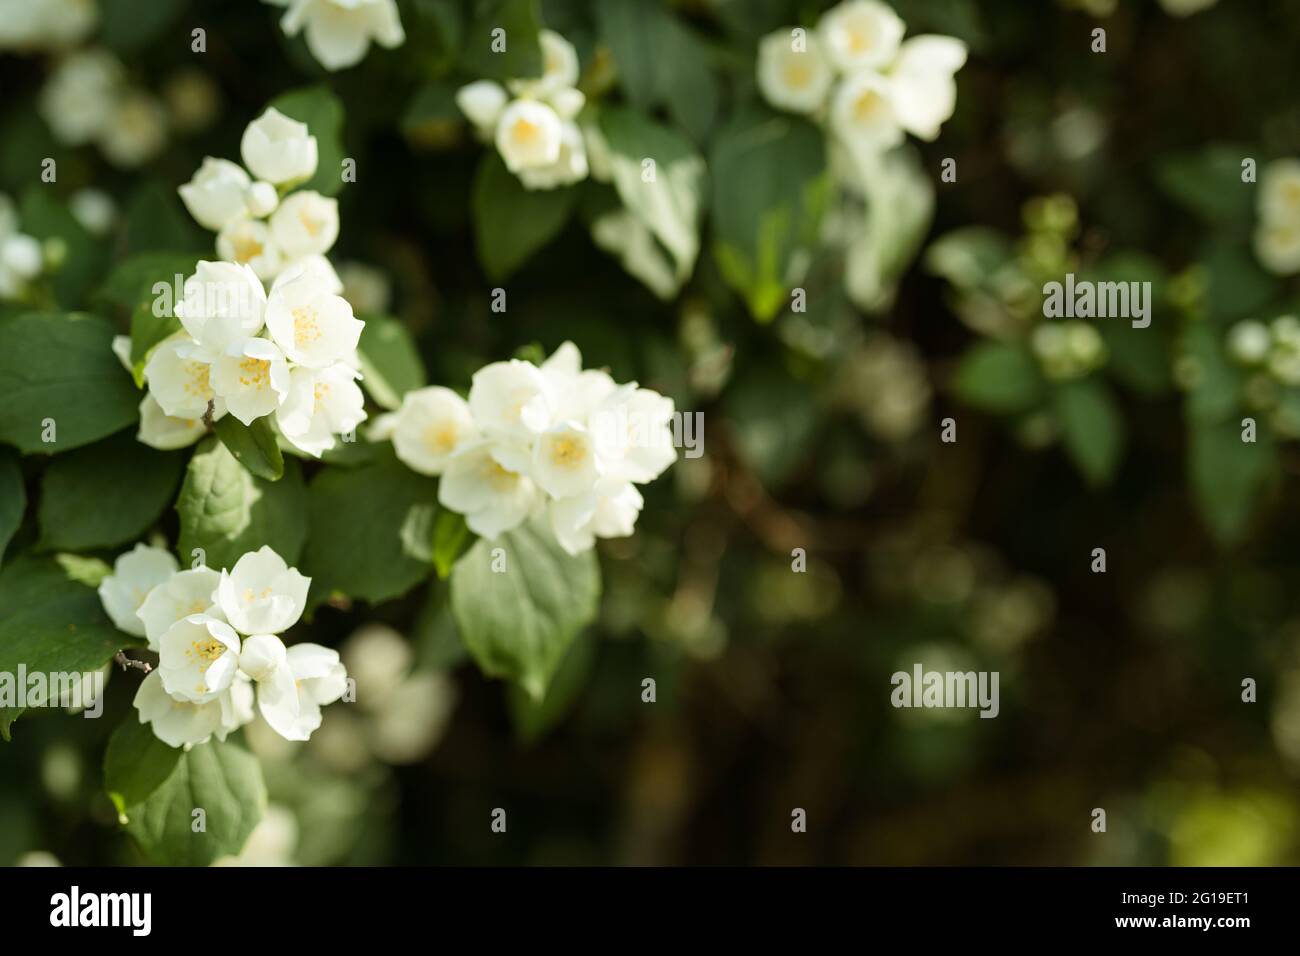 Blooming jasmine bush or shrub in summer Stock Photo